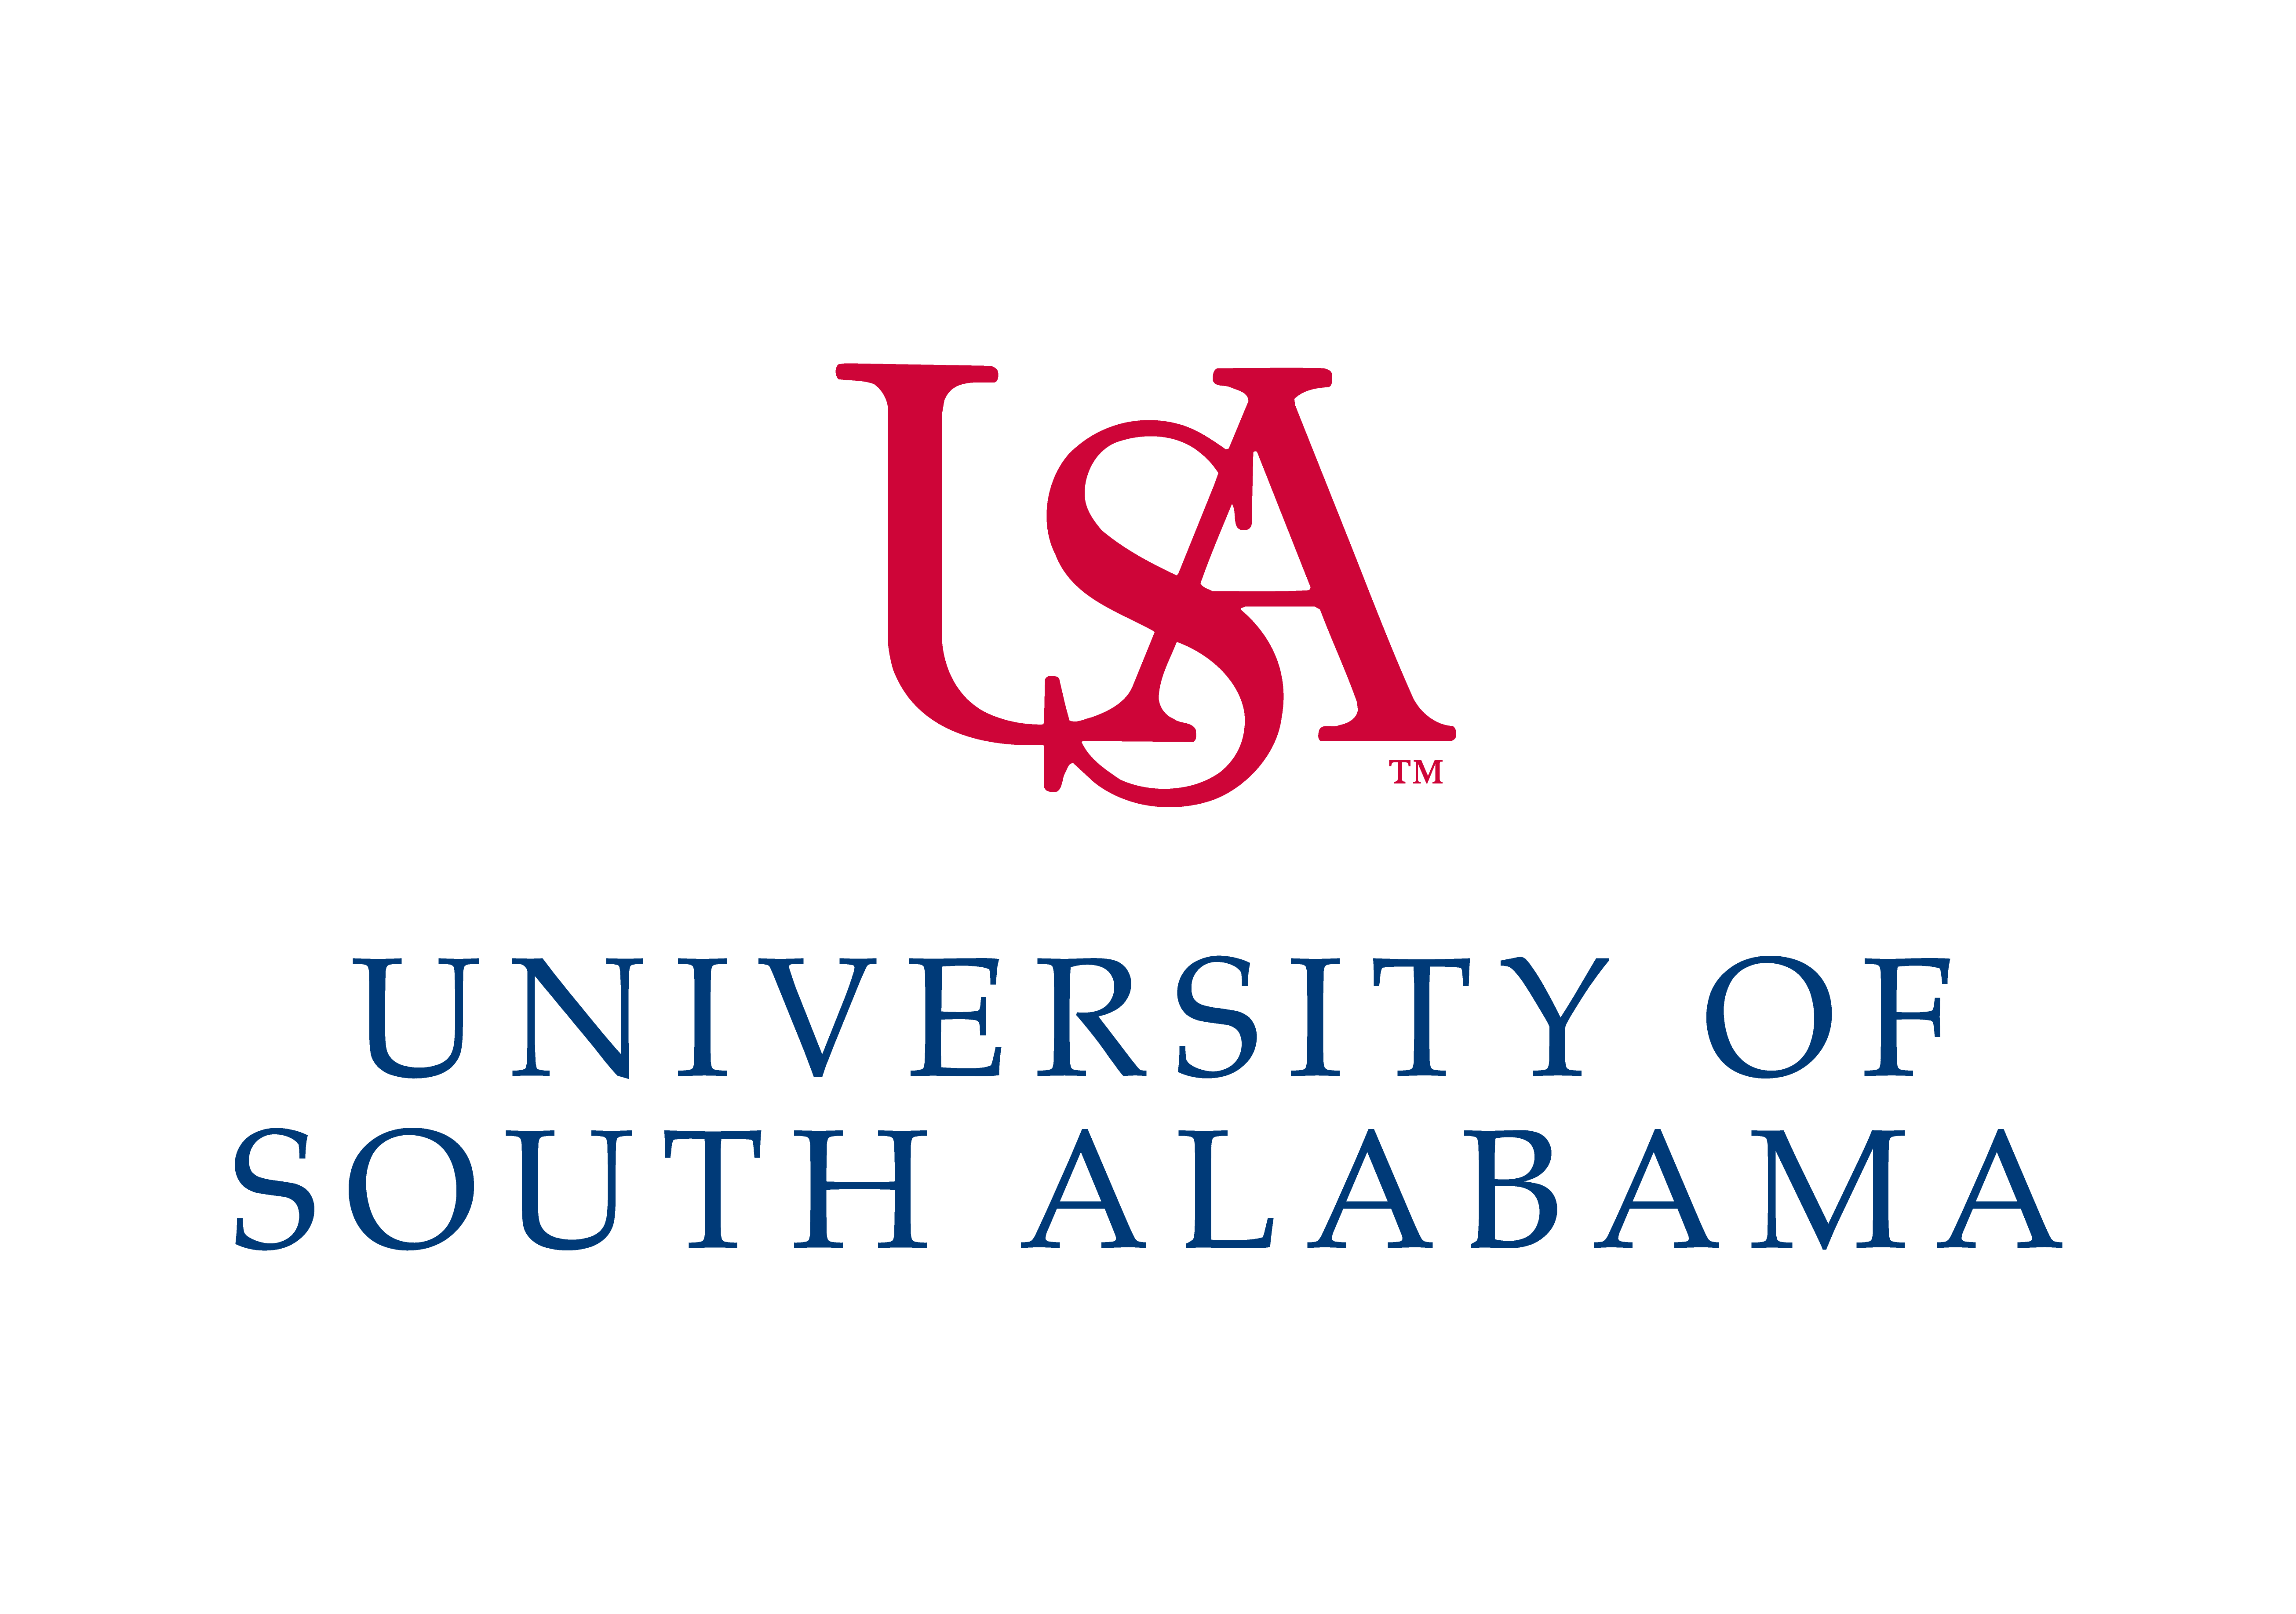 USA University of South Alabama